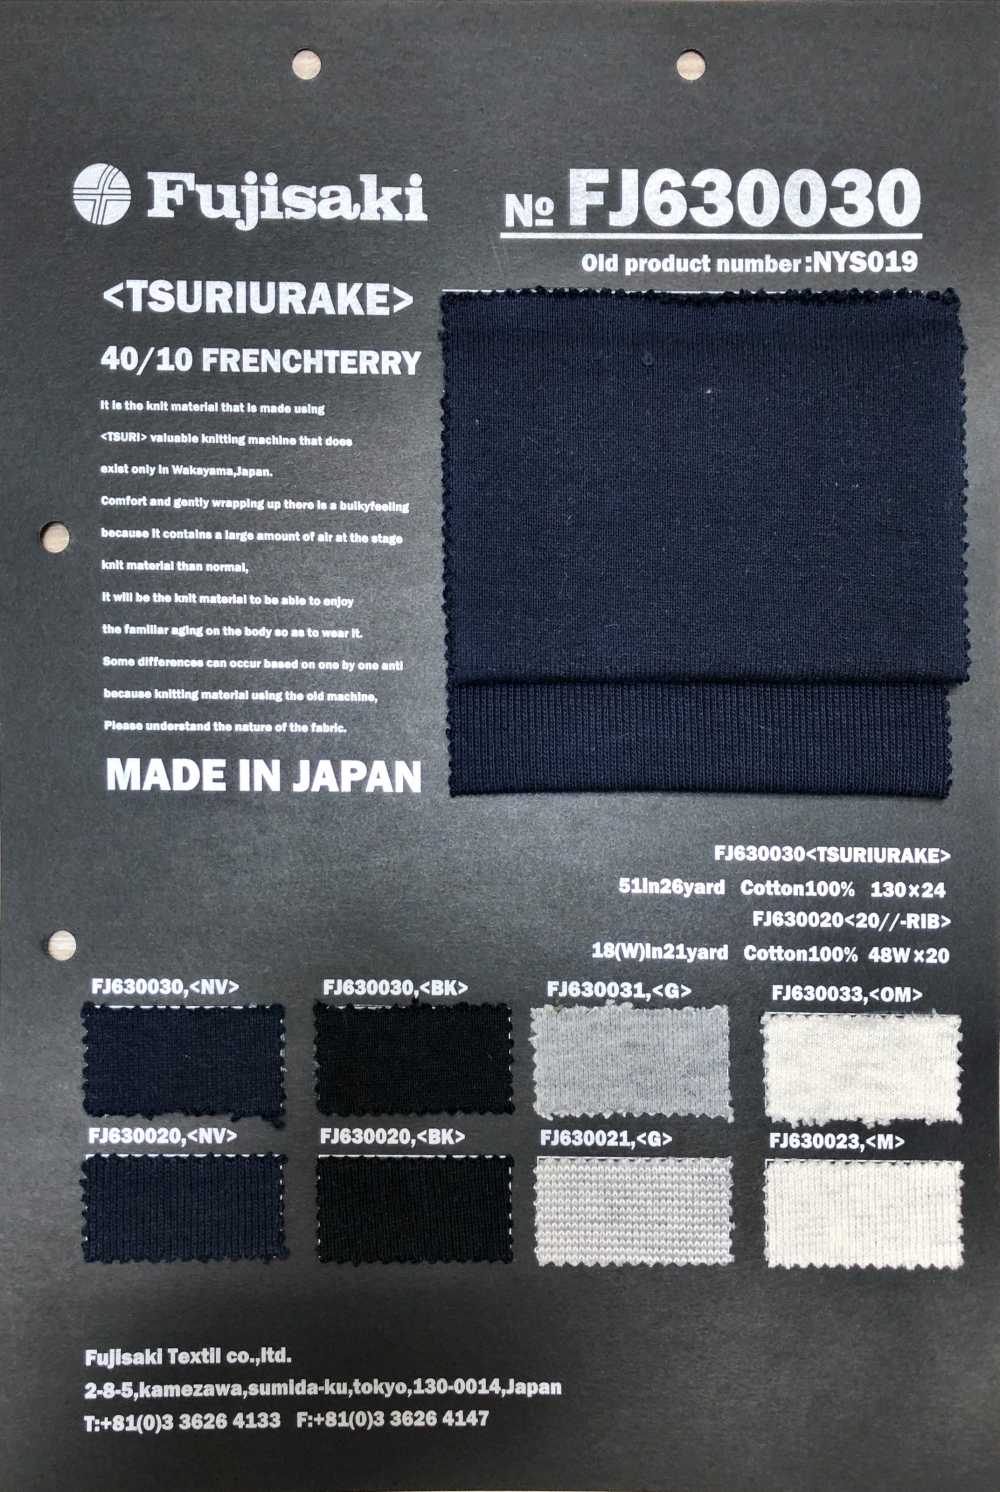 FJ630020 20 //- 리브[원단] Fujisaki Textile